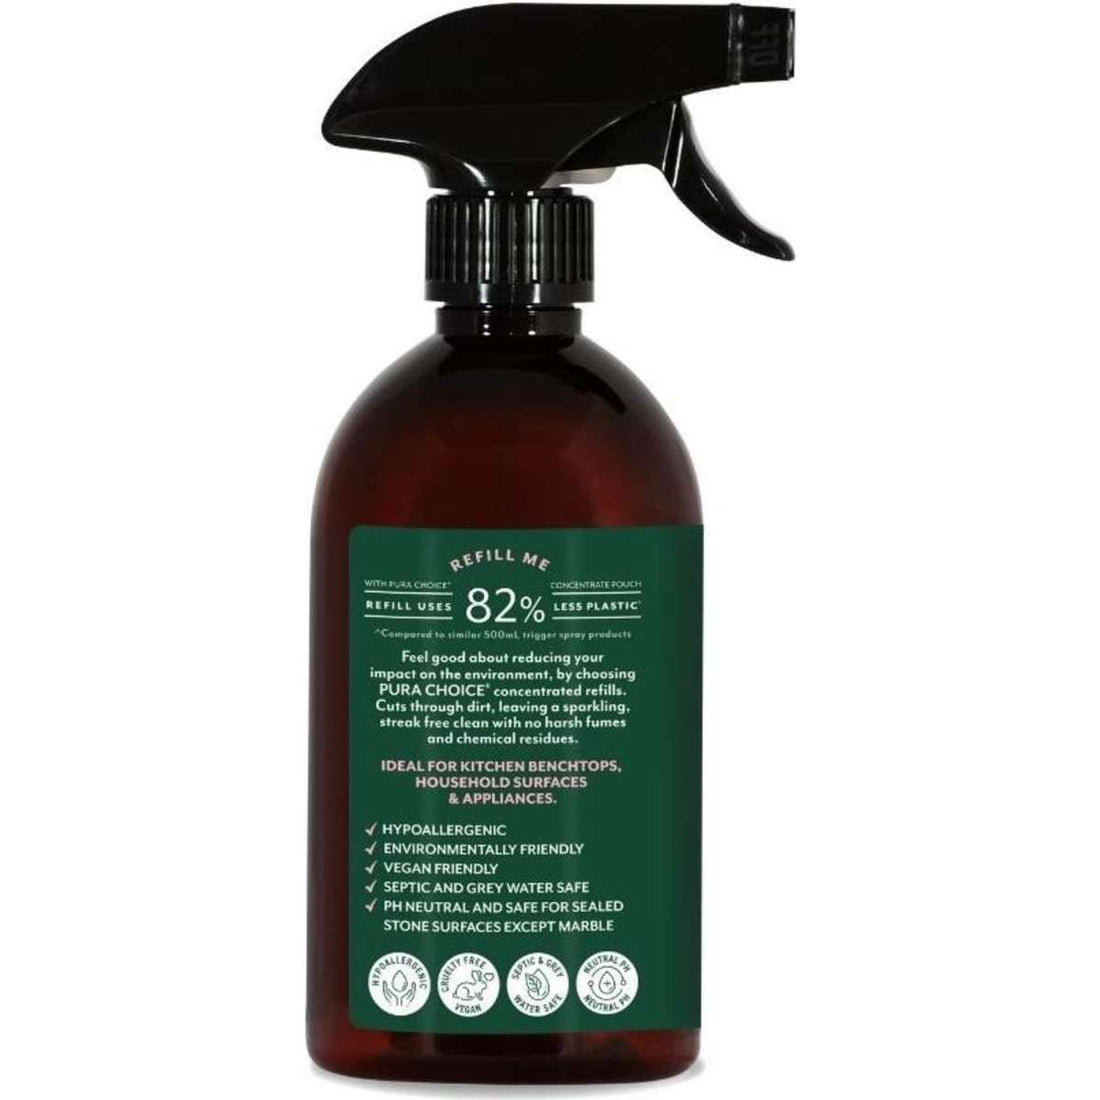 Rubbedin PuraChoice® Multi-Purpose Cleaner with Rose Geranium & Lemon Myrtle Essential Oil 500mL